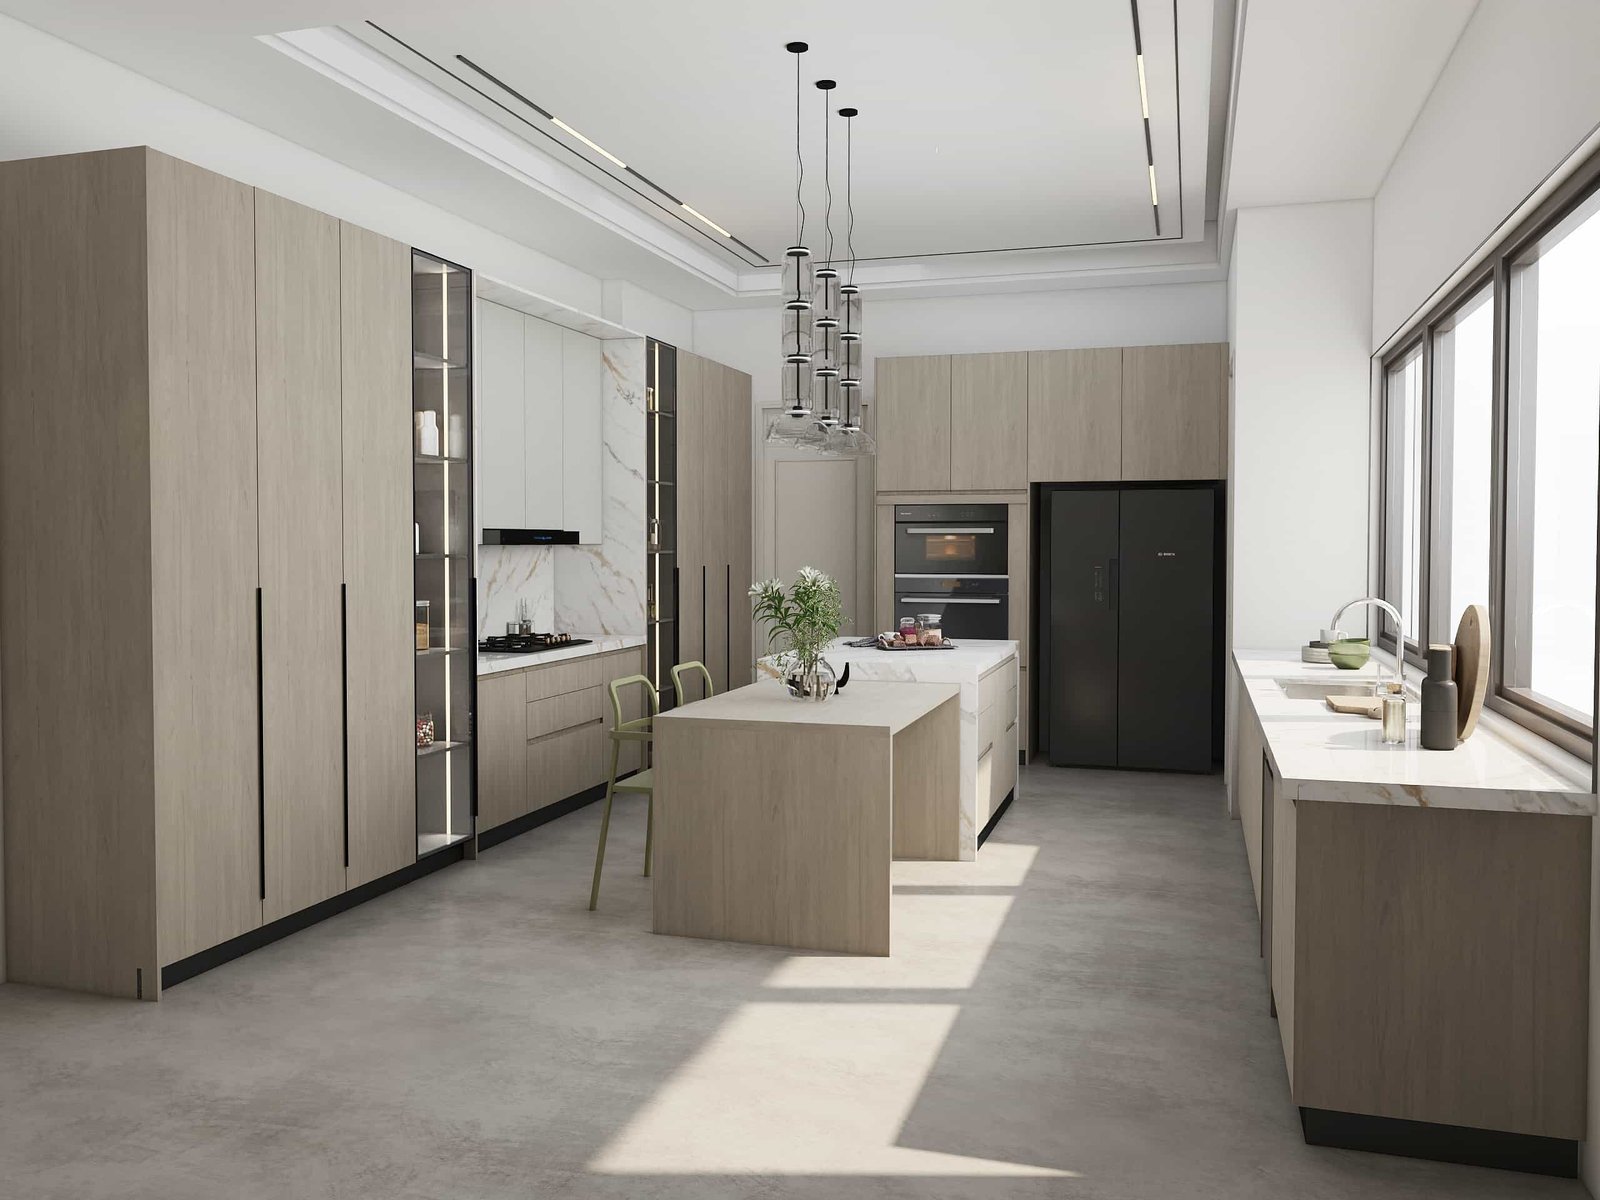 Modern-Minimalism-Meets-Warm-Wood-Tones-Kitchen-Cabinets-2.jpg